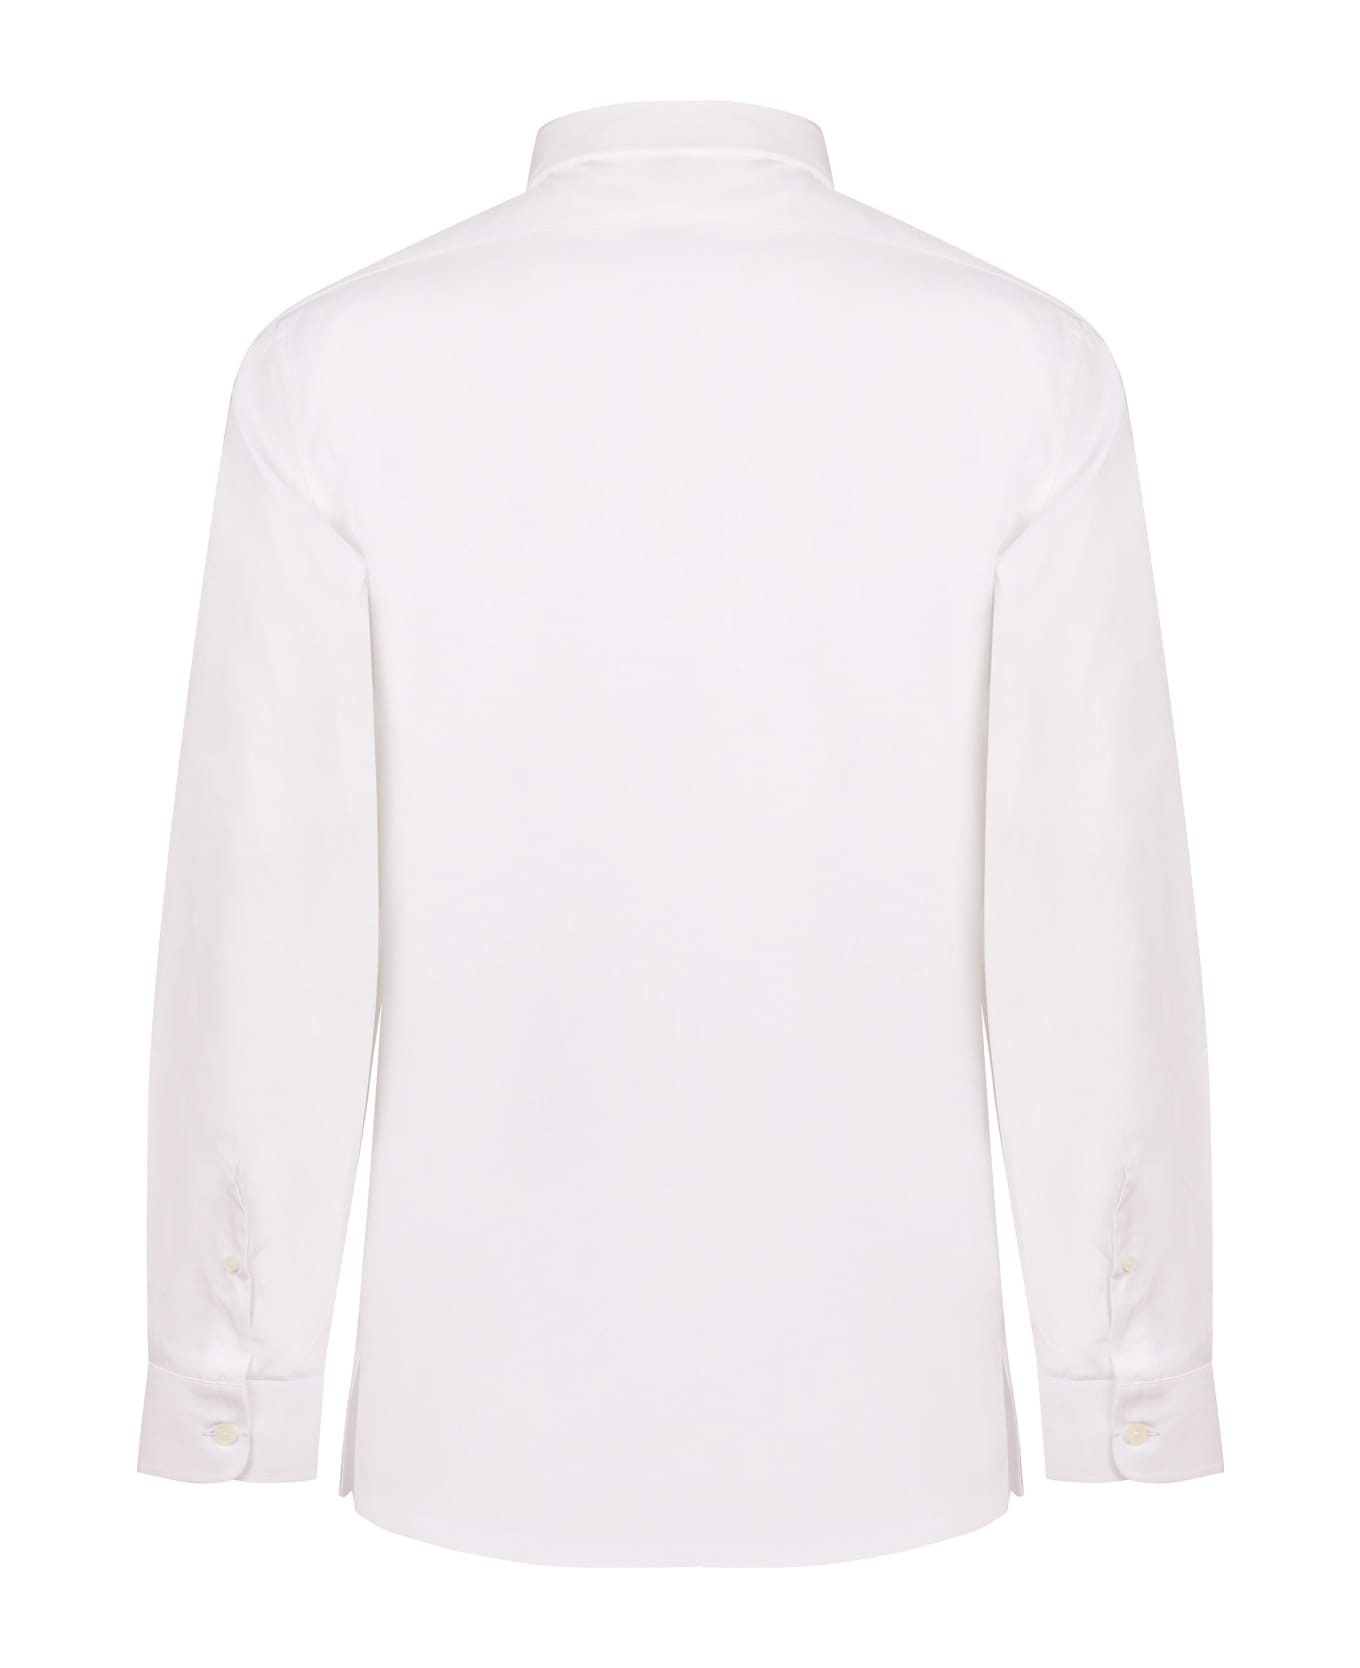 Givenchy Cotton Shirt - White